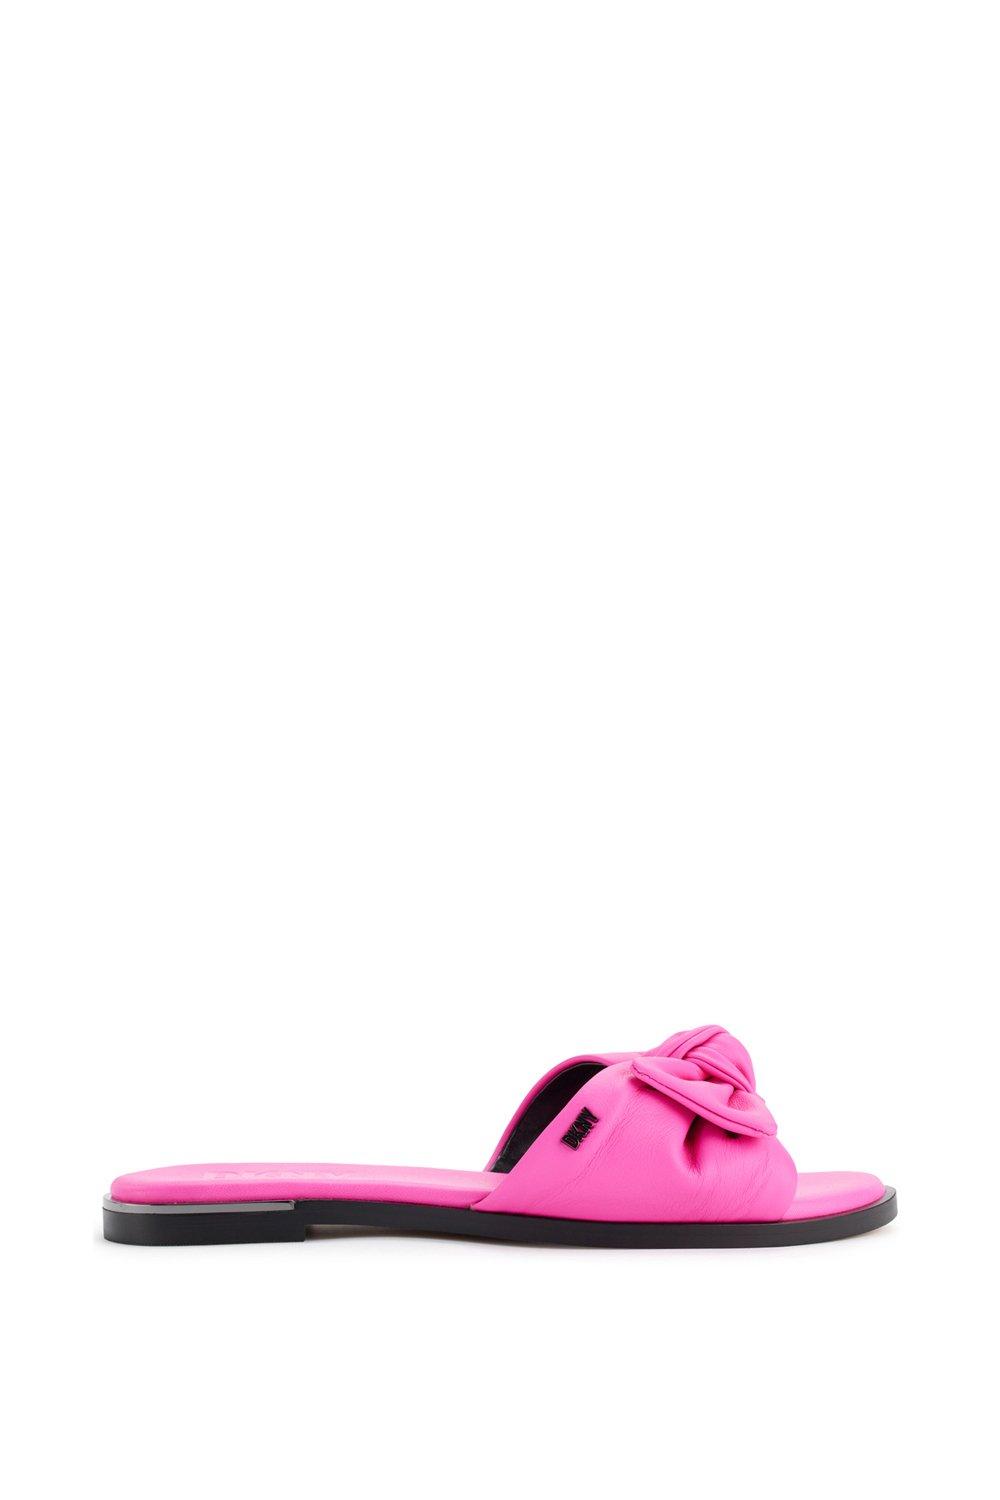 Sandals | Walta Bow Flat Sandal Pink | DKNY